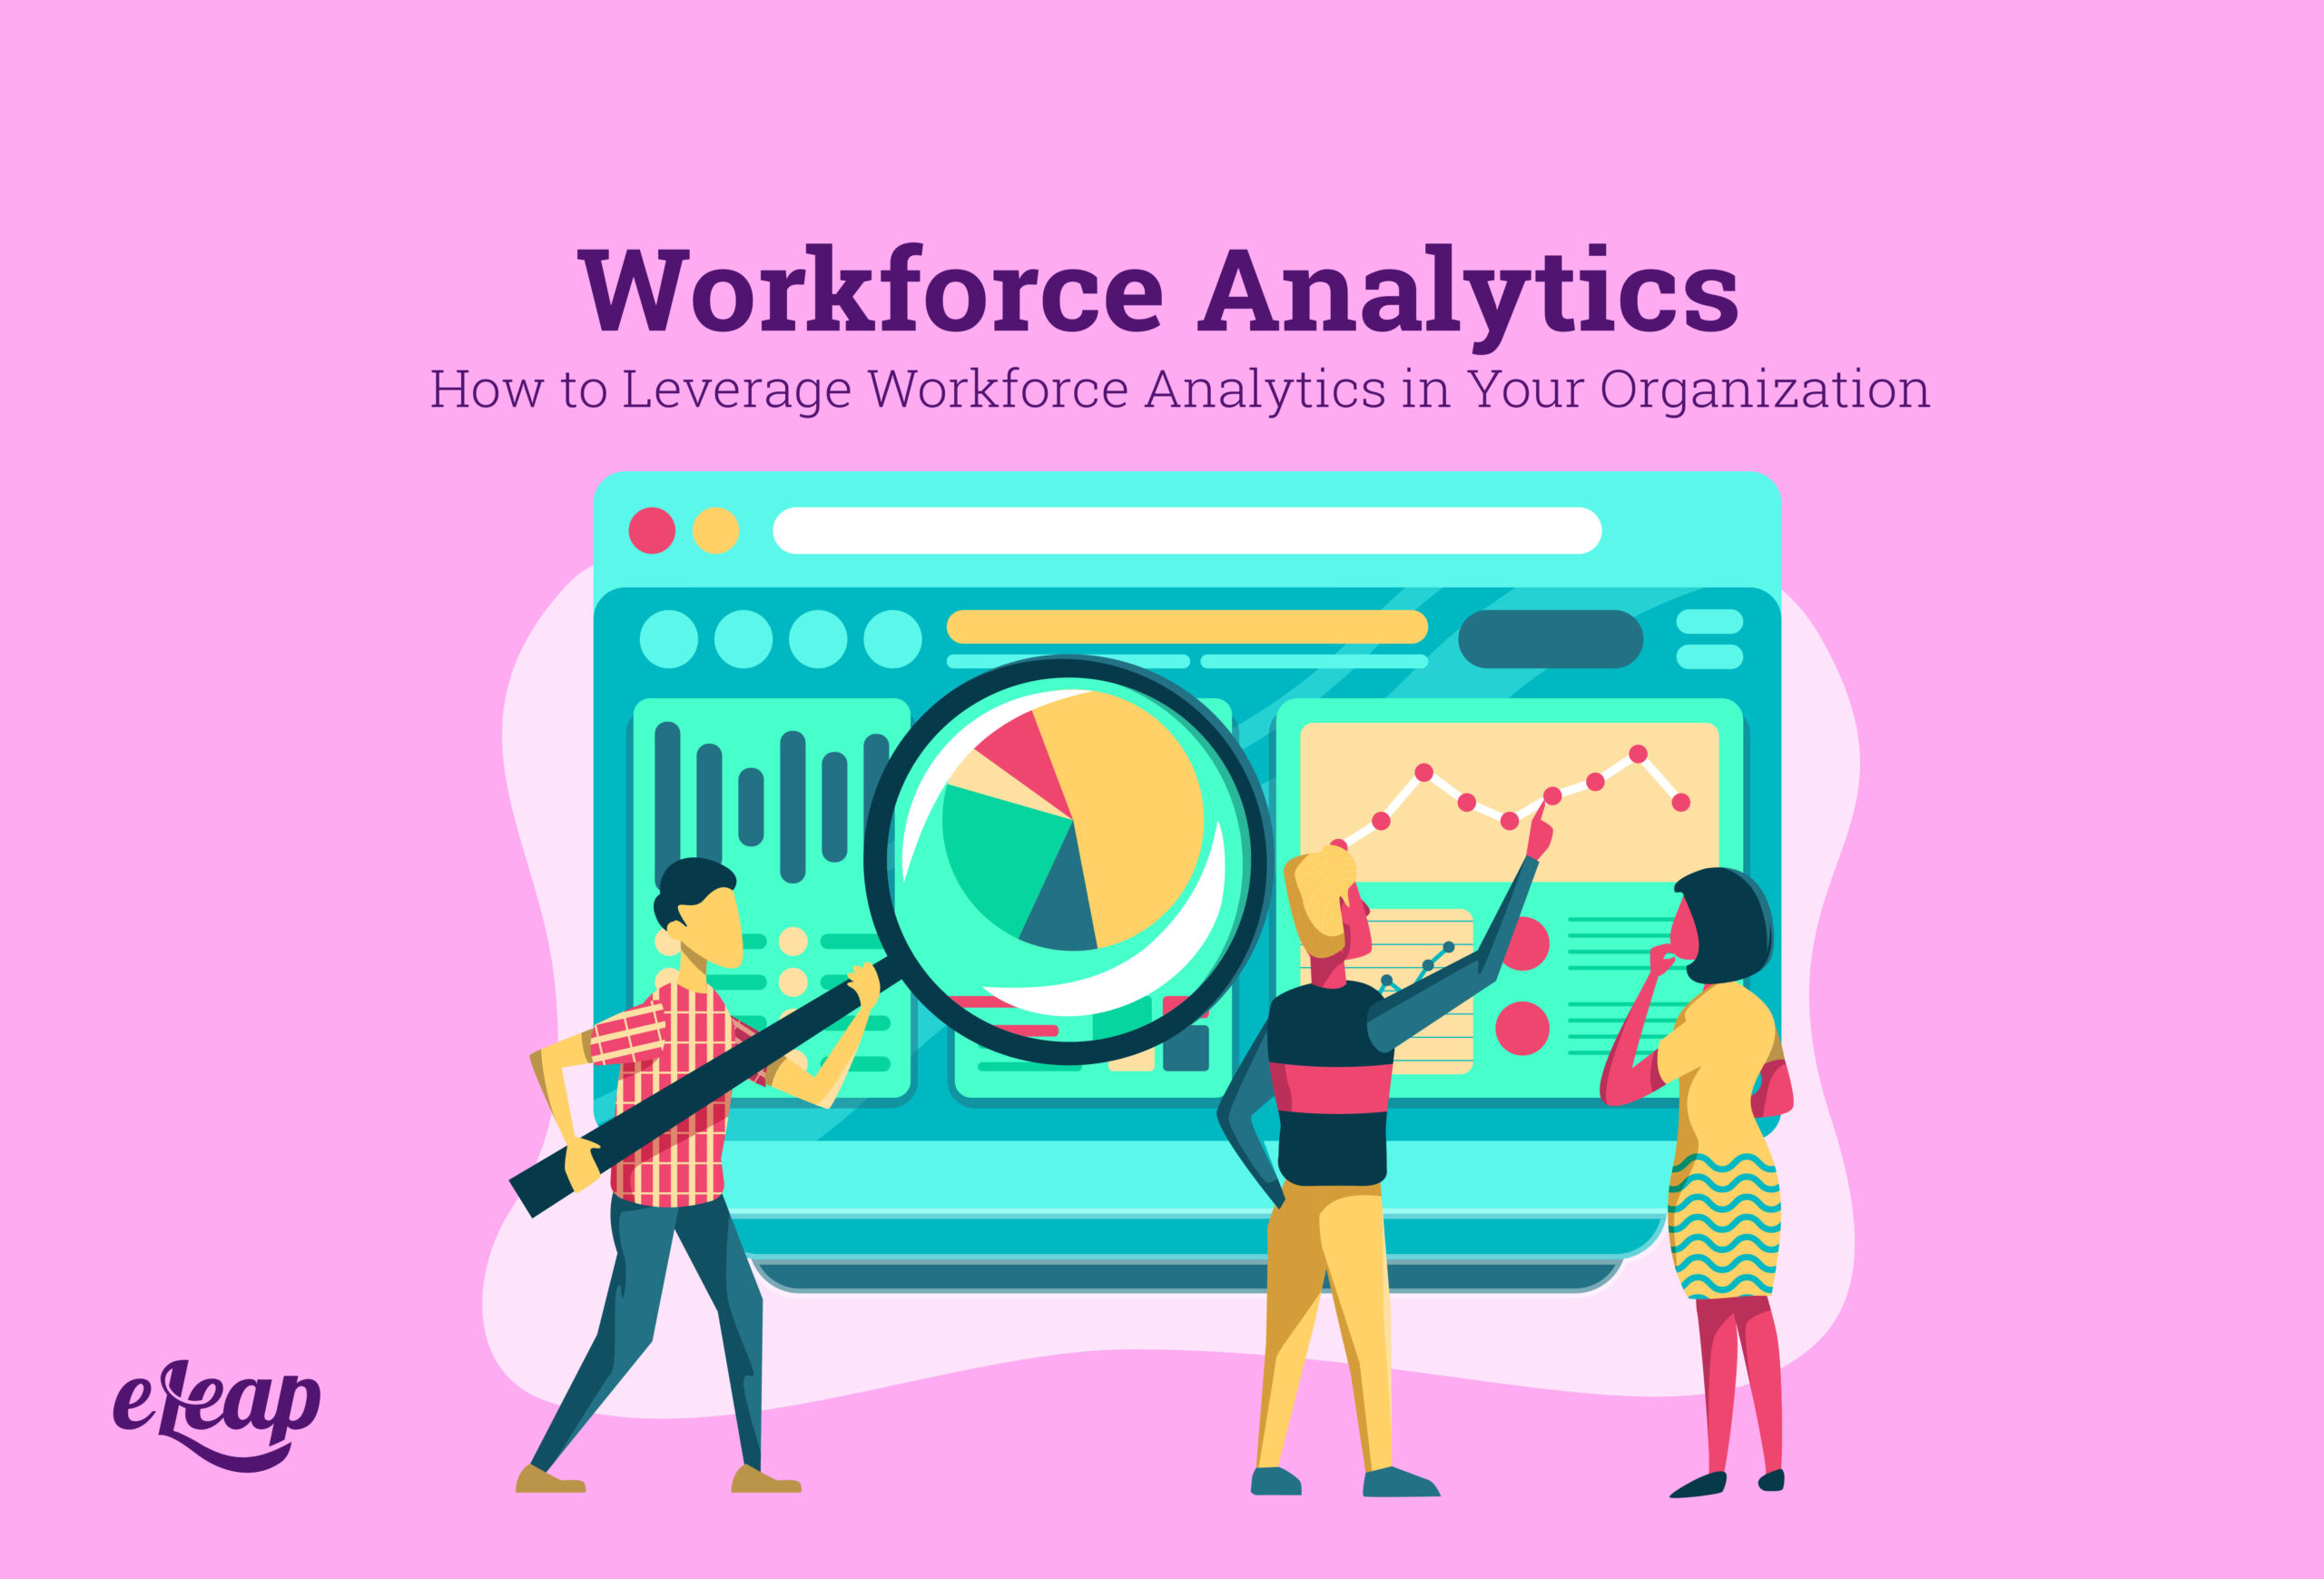 How to Leverage Workforce Analytics in Your Organization